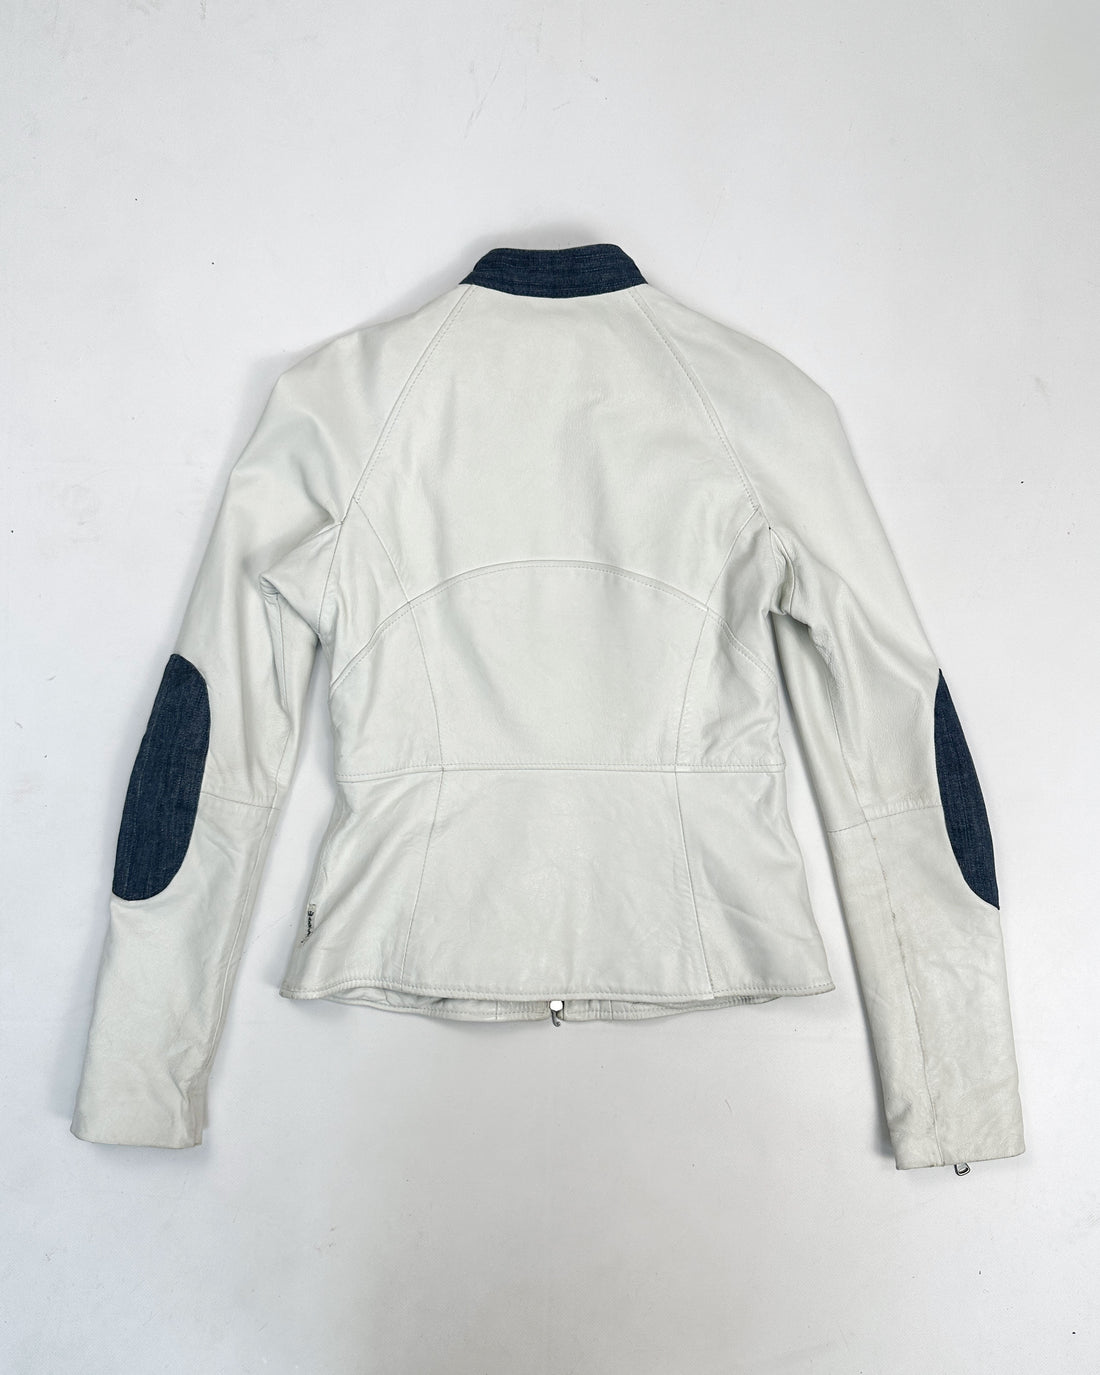 Armani White Leather + Denim Jacket 1990's